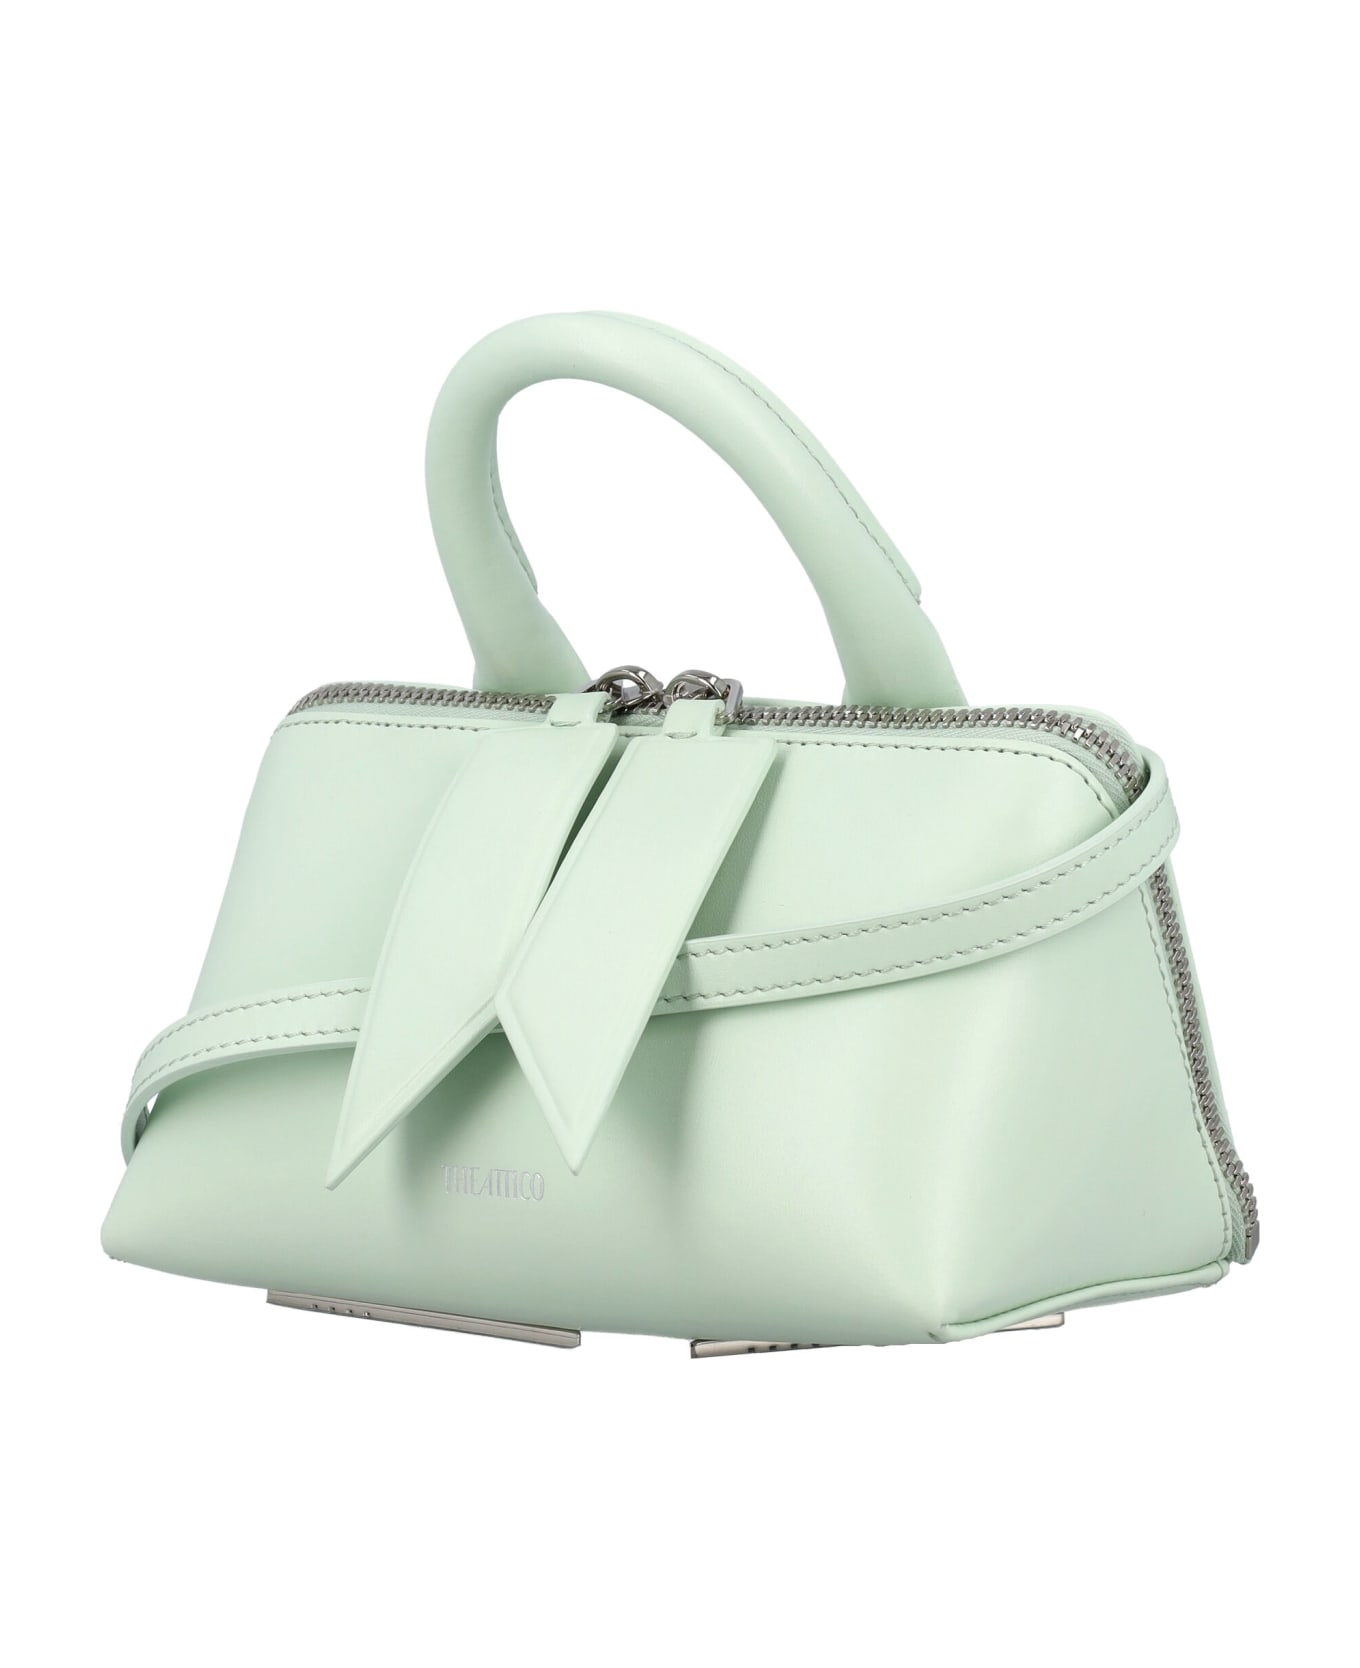 The Attico Friday Mini Handbag - Aquamarine バッグ